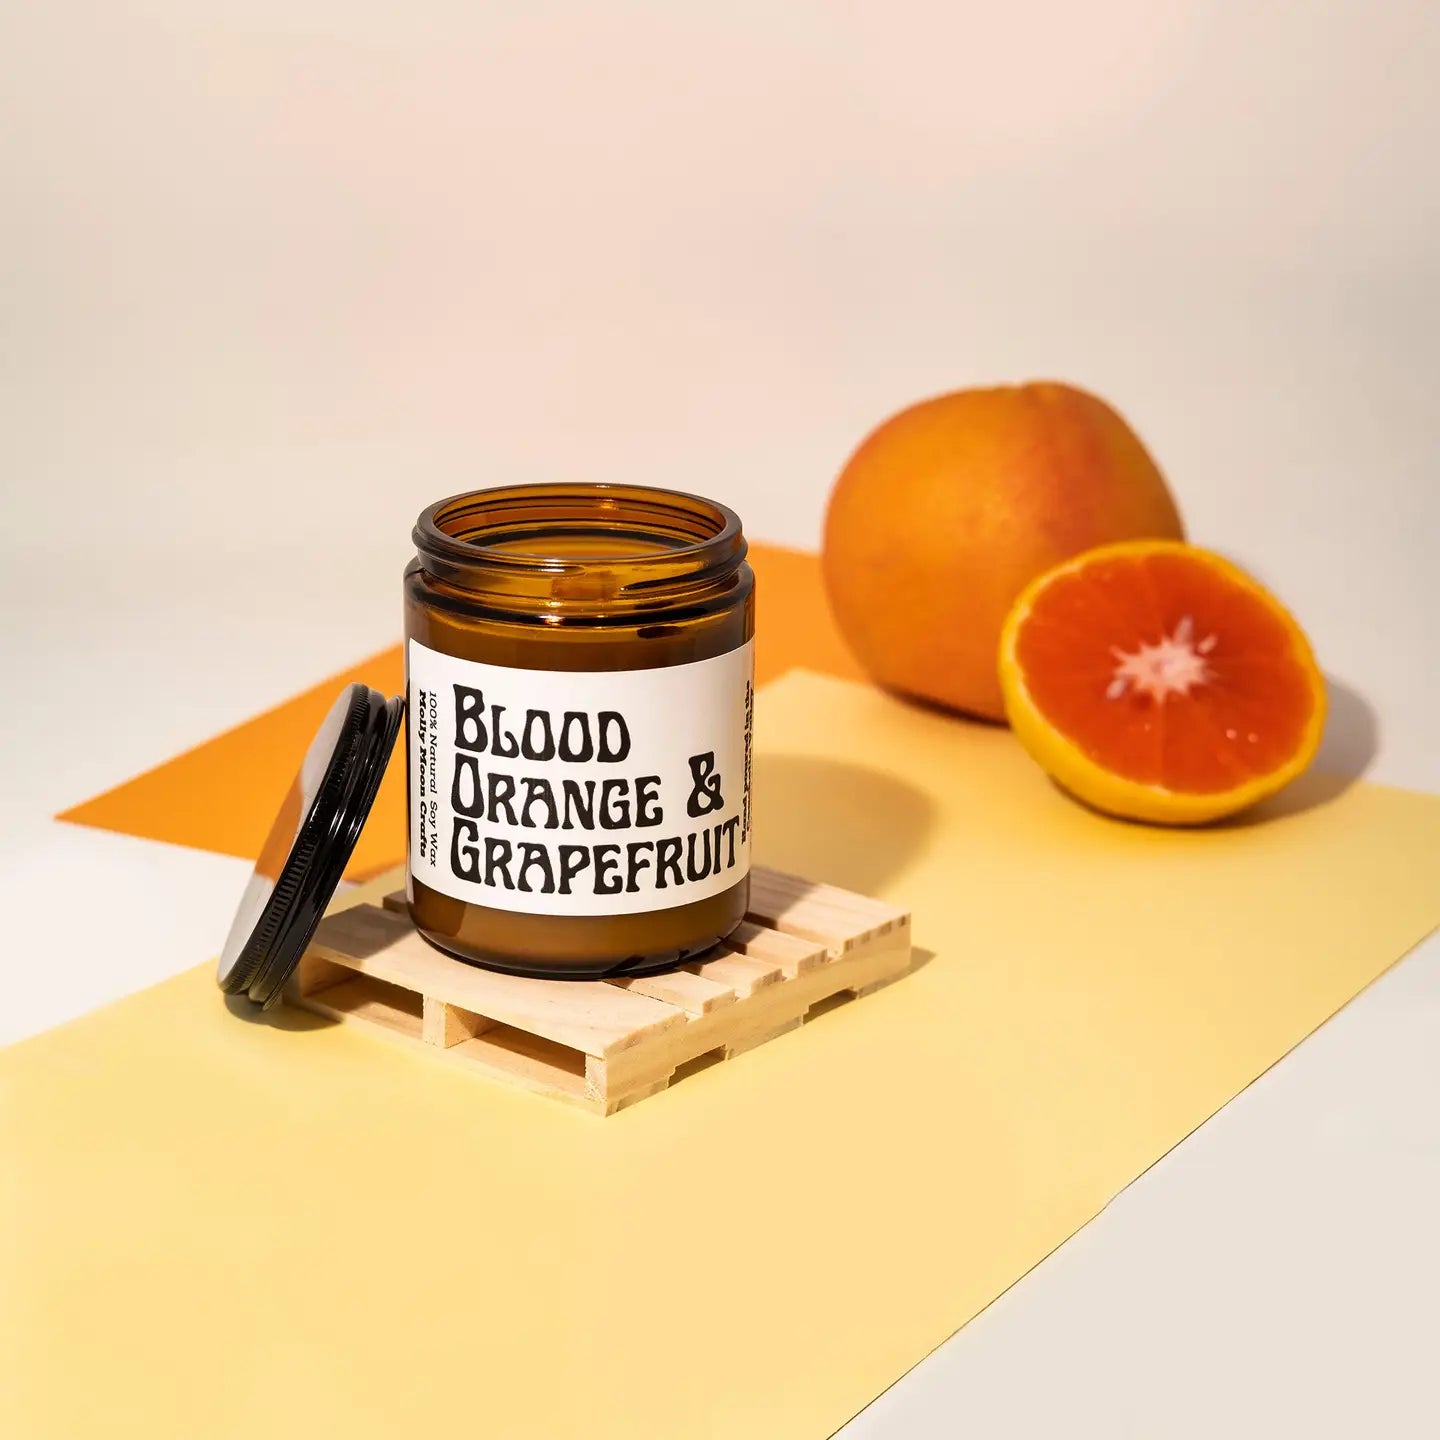 Blood Orange & Grapefruit Candle